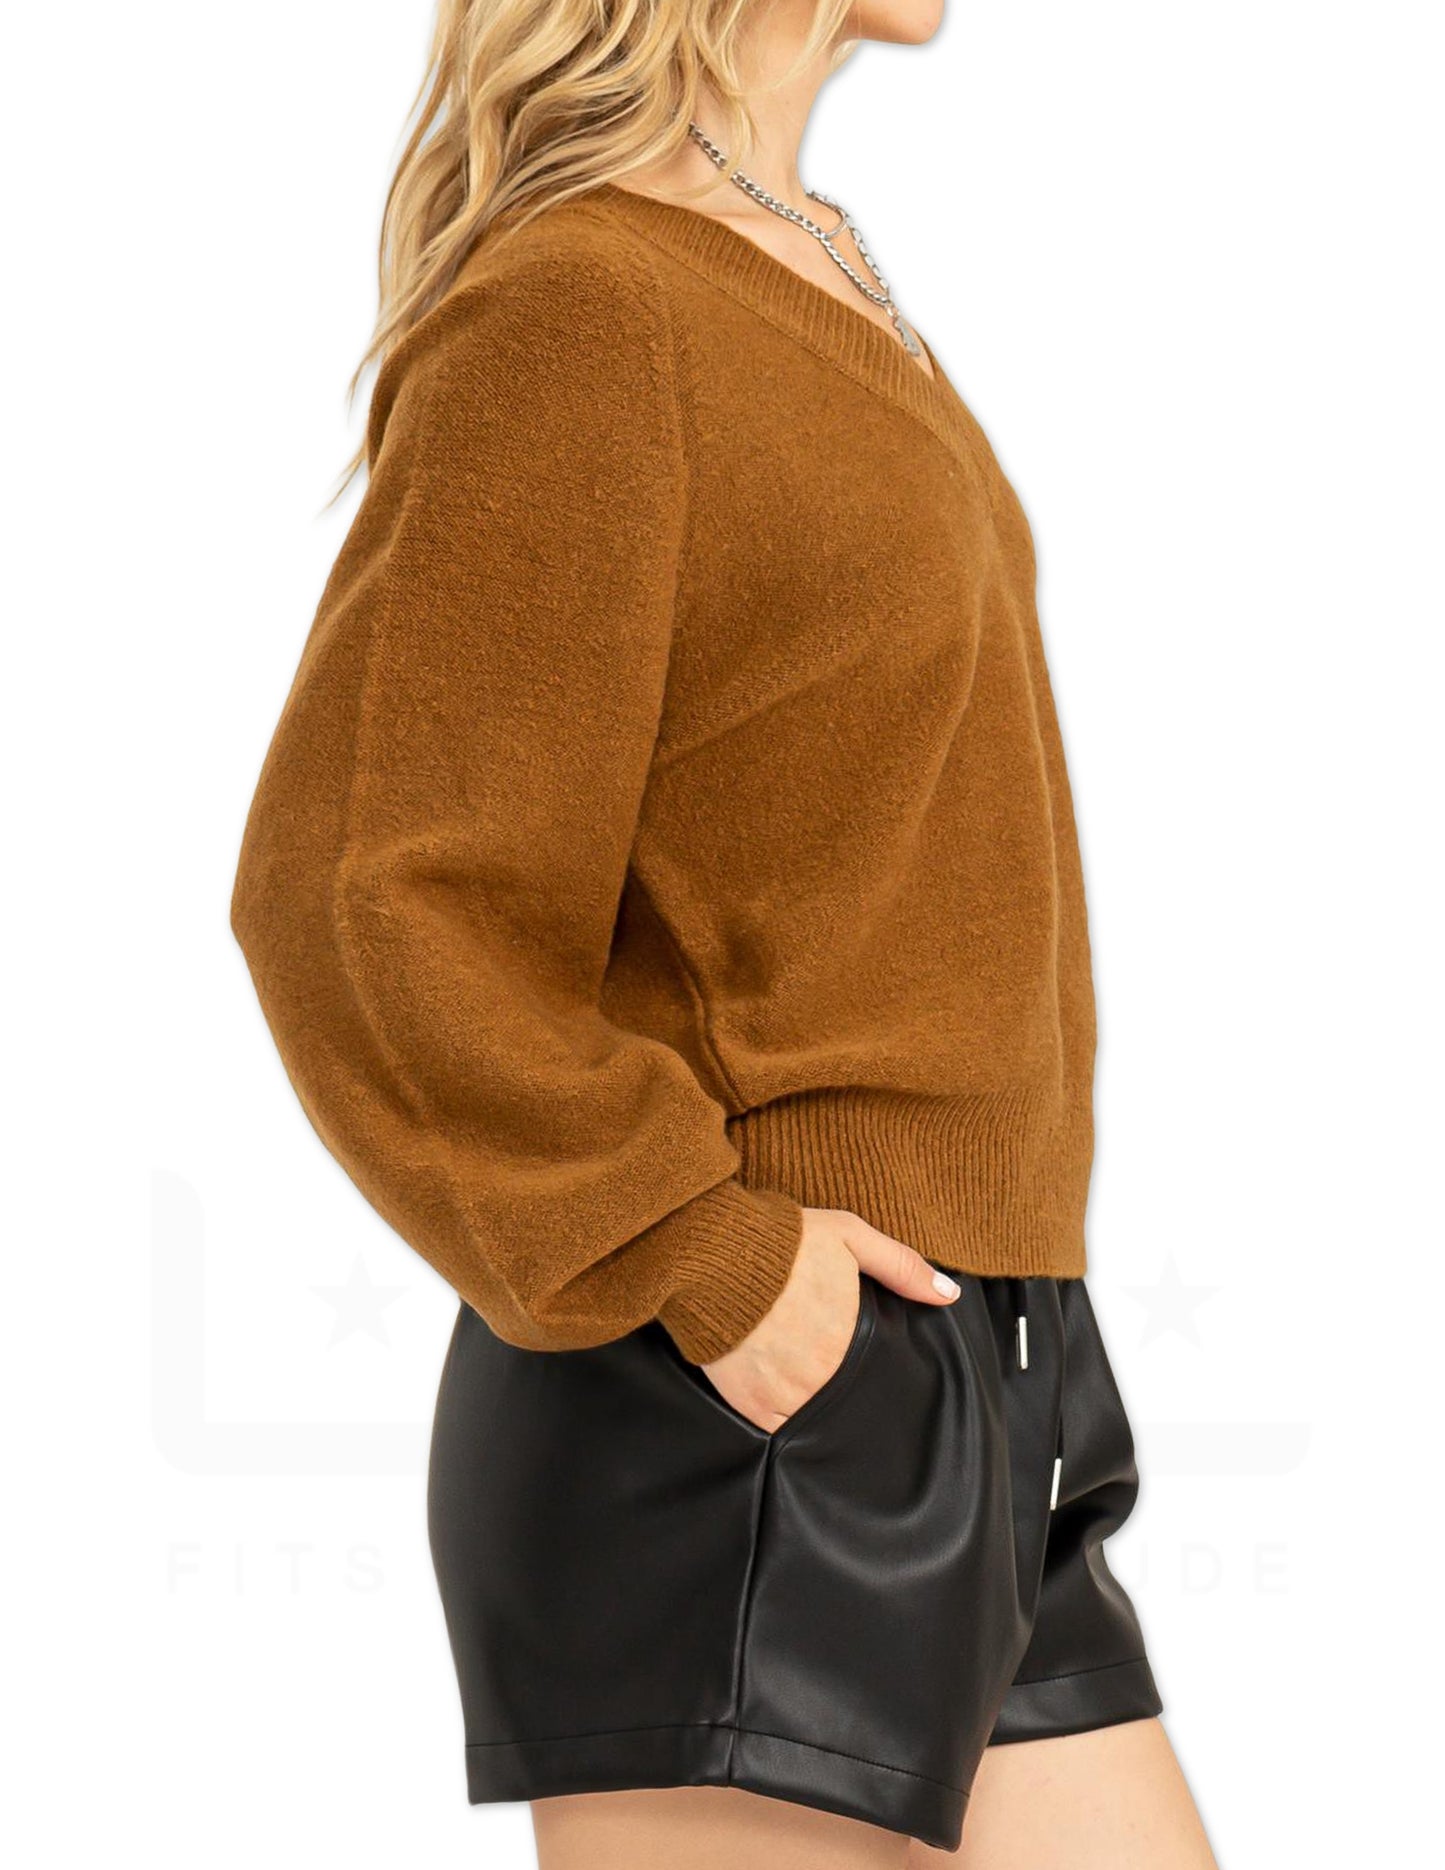 Deep V-Neckling Sweater - Pale Brown